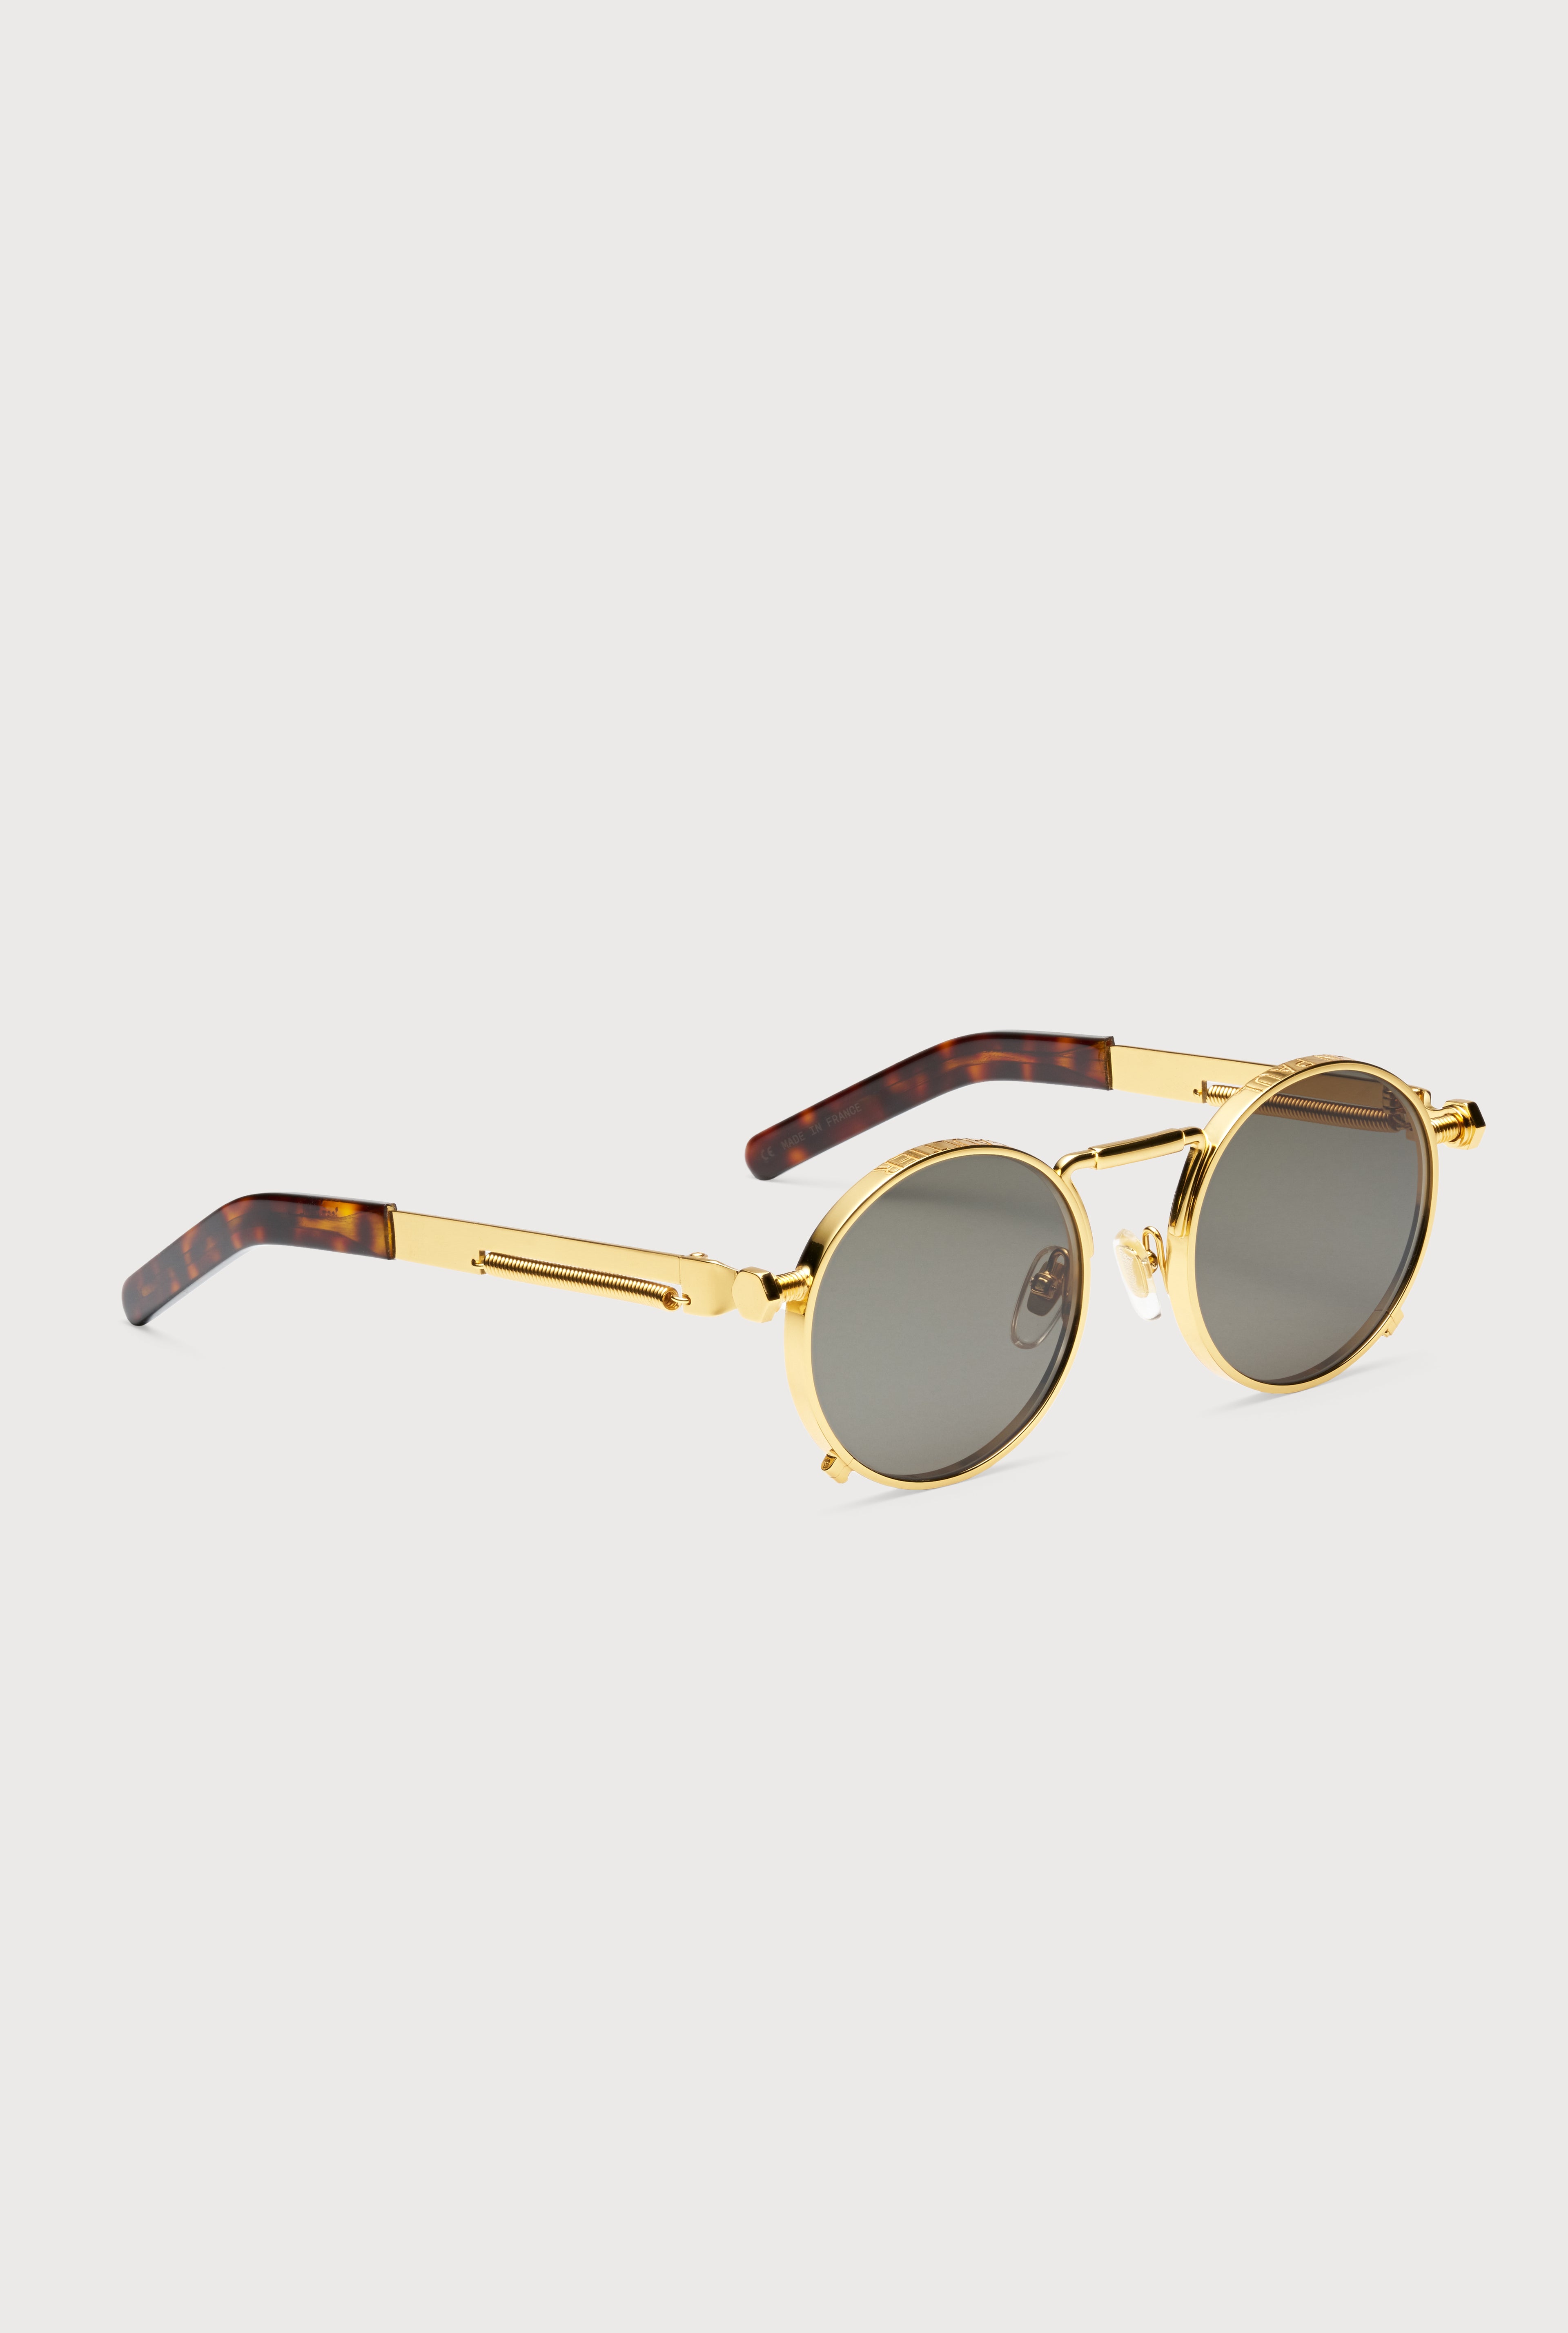 The Gold 56-8171 Sunglasses